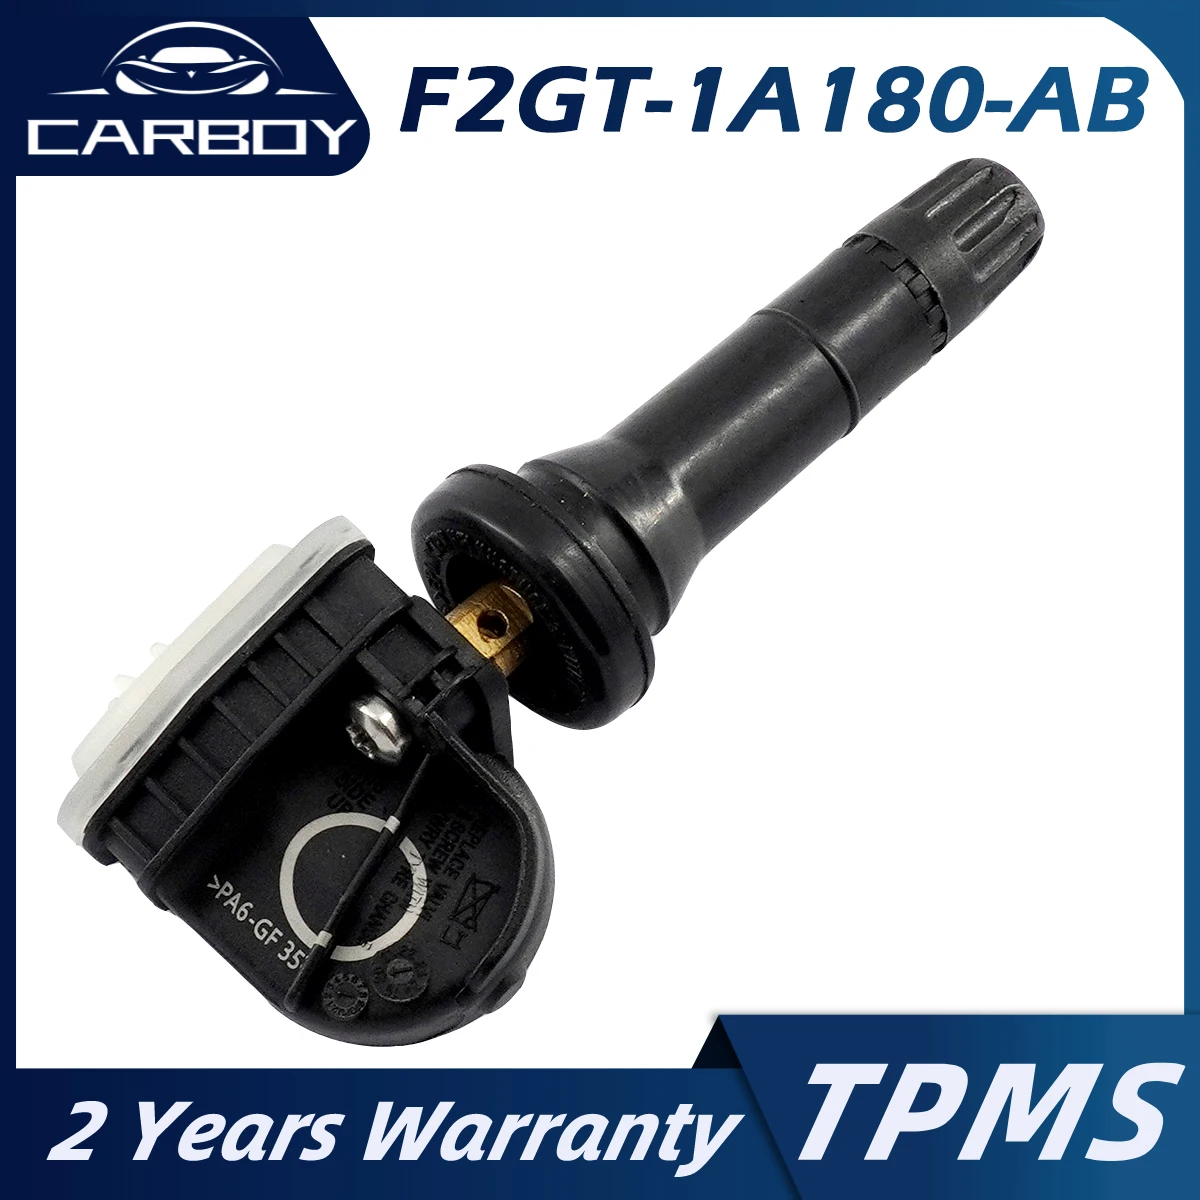 

F2GT-1A180-AB TPMS Tire Pressure Sensor For Ford Explorer Edge F-150 Flex Mustang Ecosport Lincoln Continental MKX MKS Mark LT